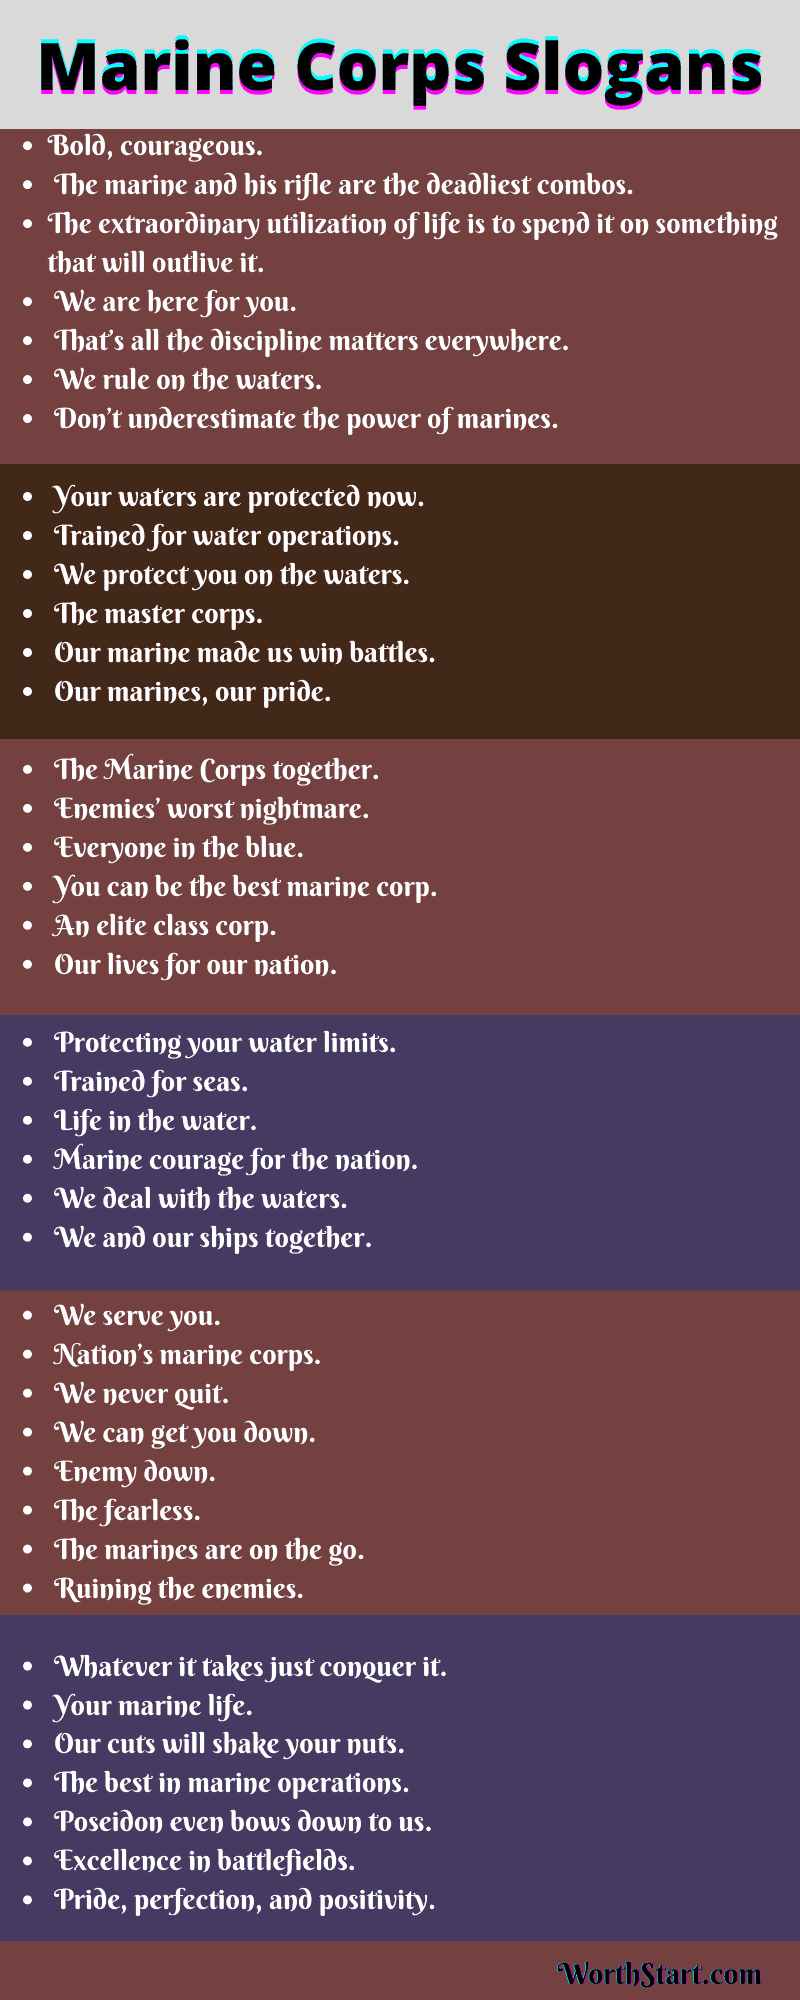 Marine Corps Slogans